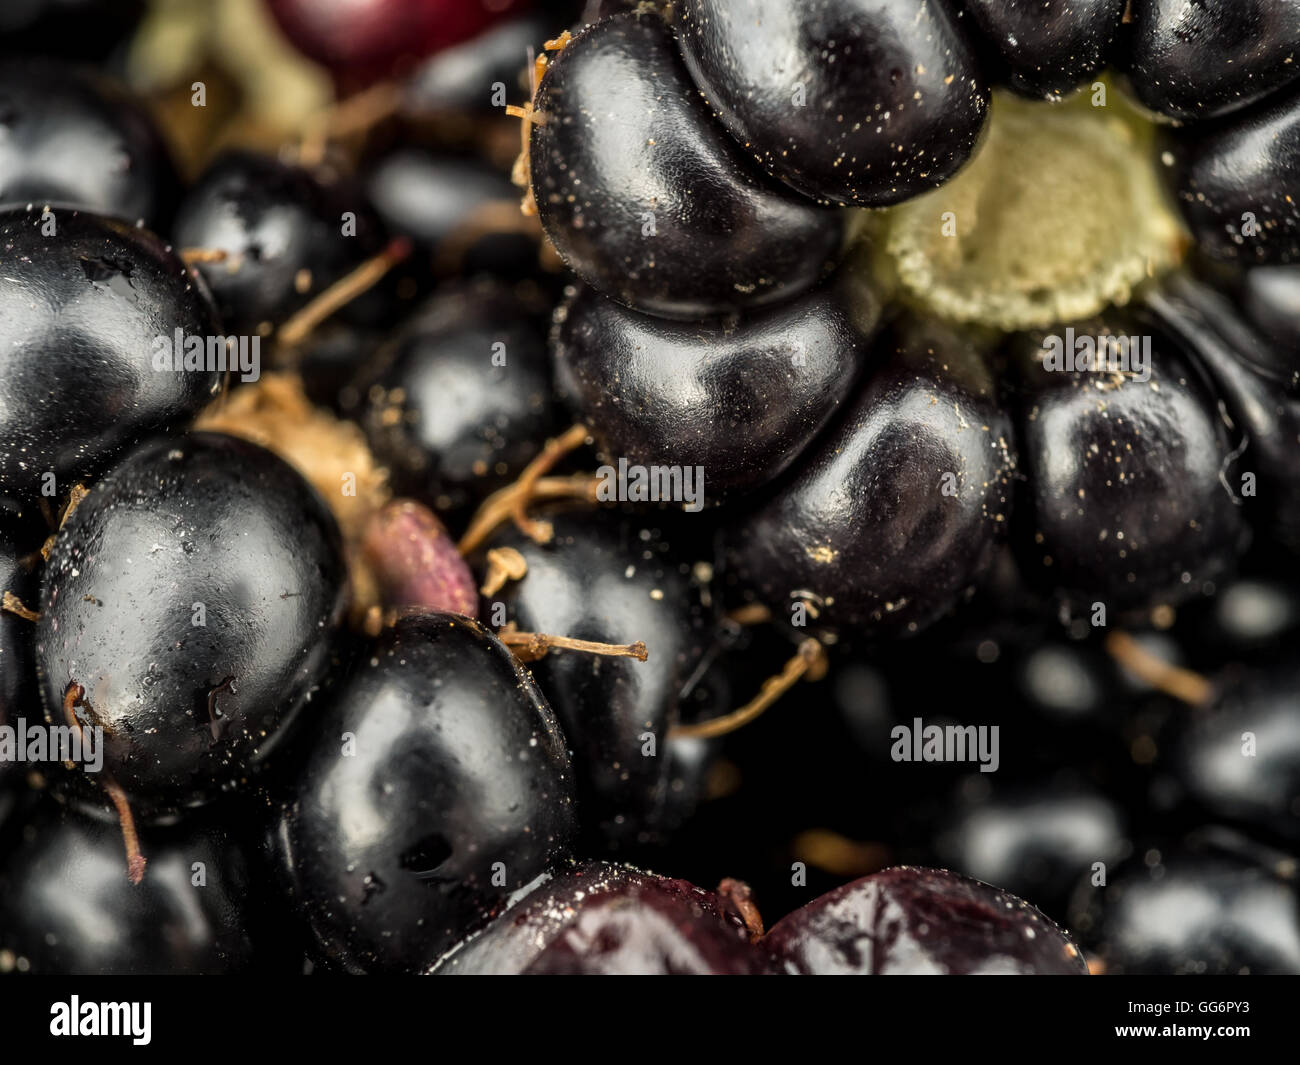 Closeup shot of fresh and juicy blackberries Stock Photo